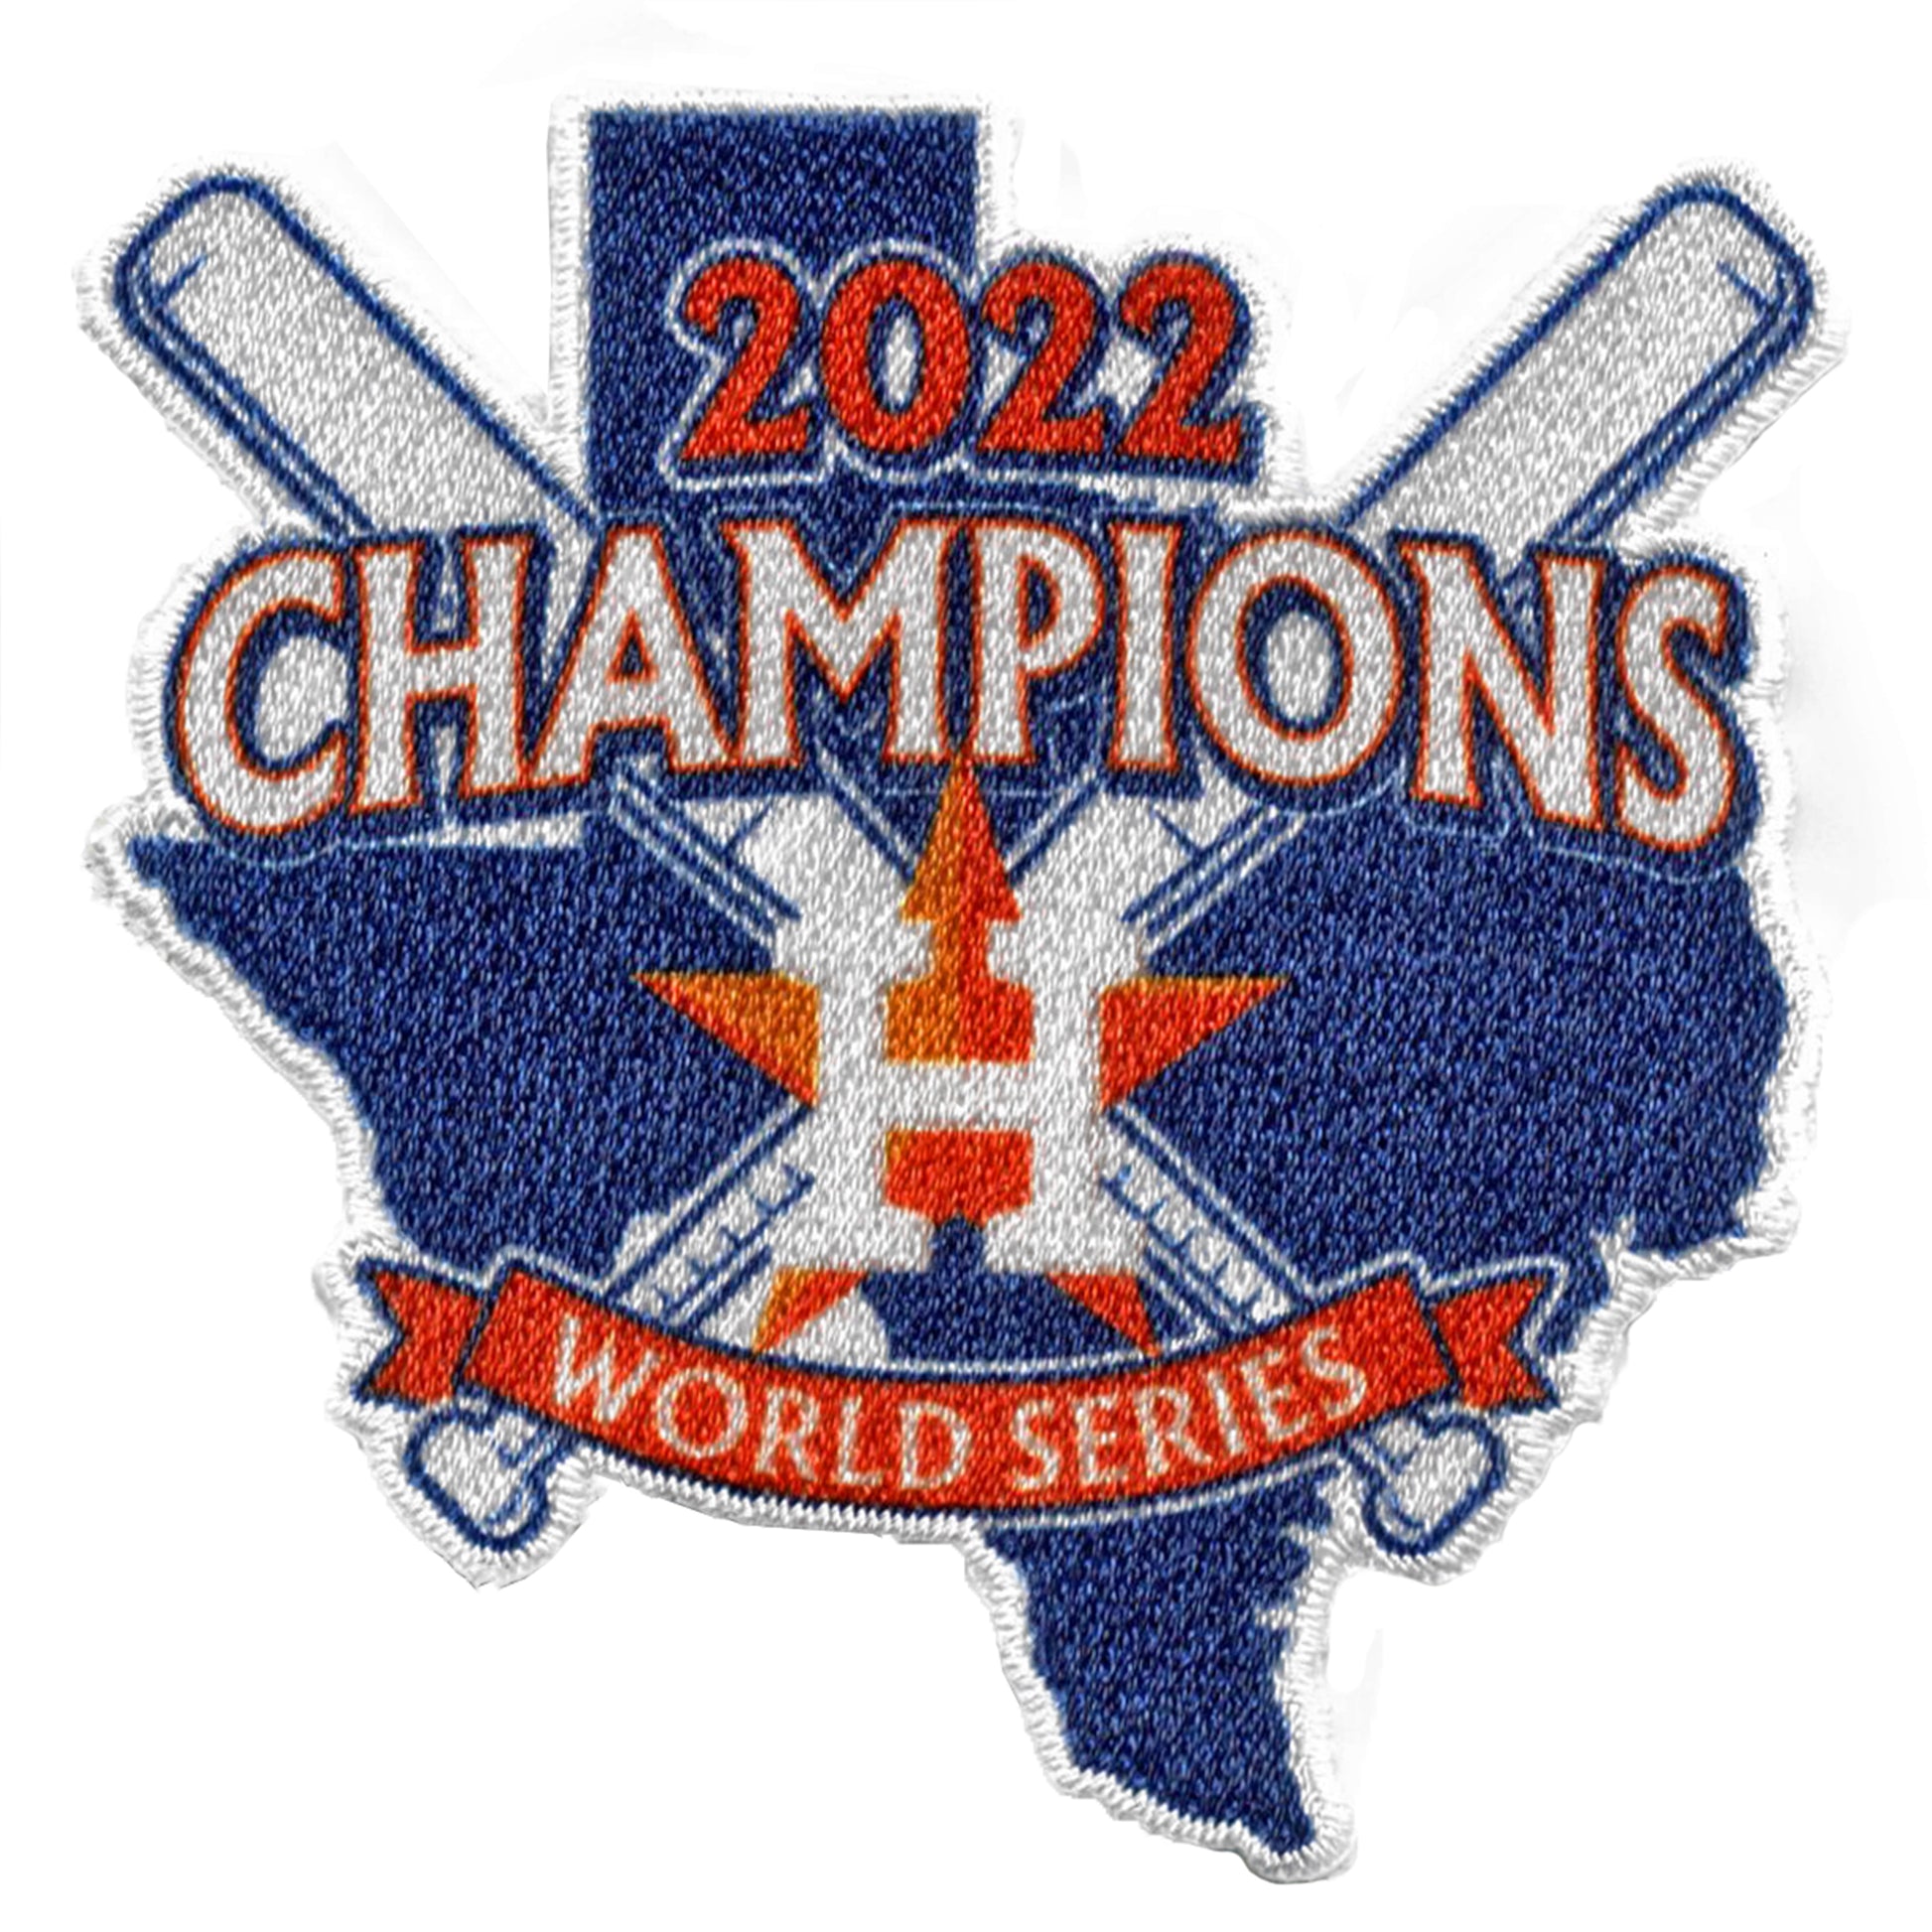 astros 2022 world series champions wallpaper